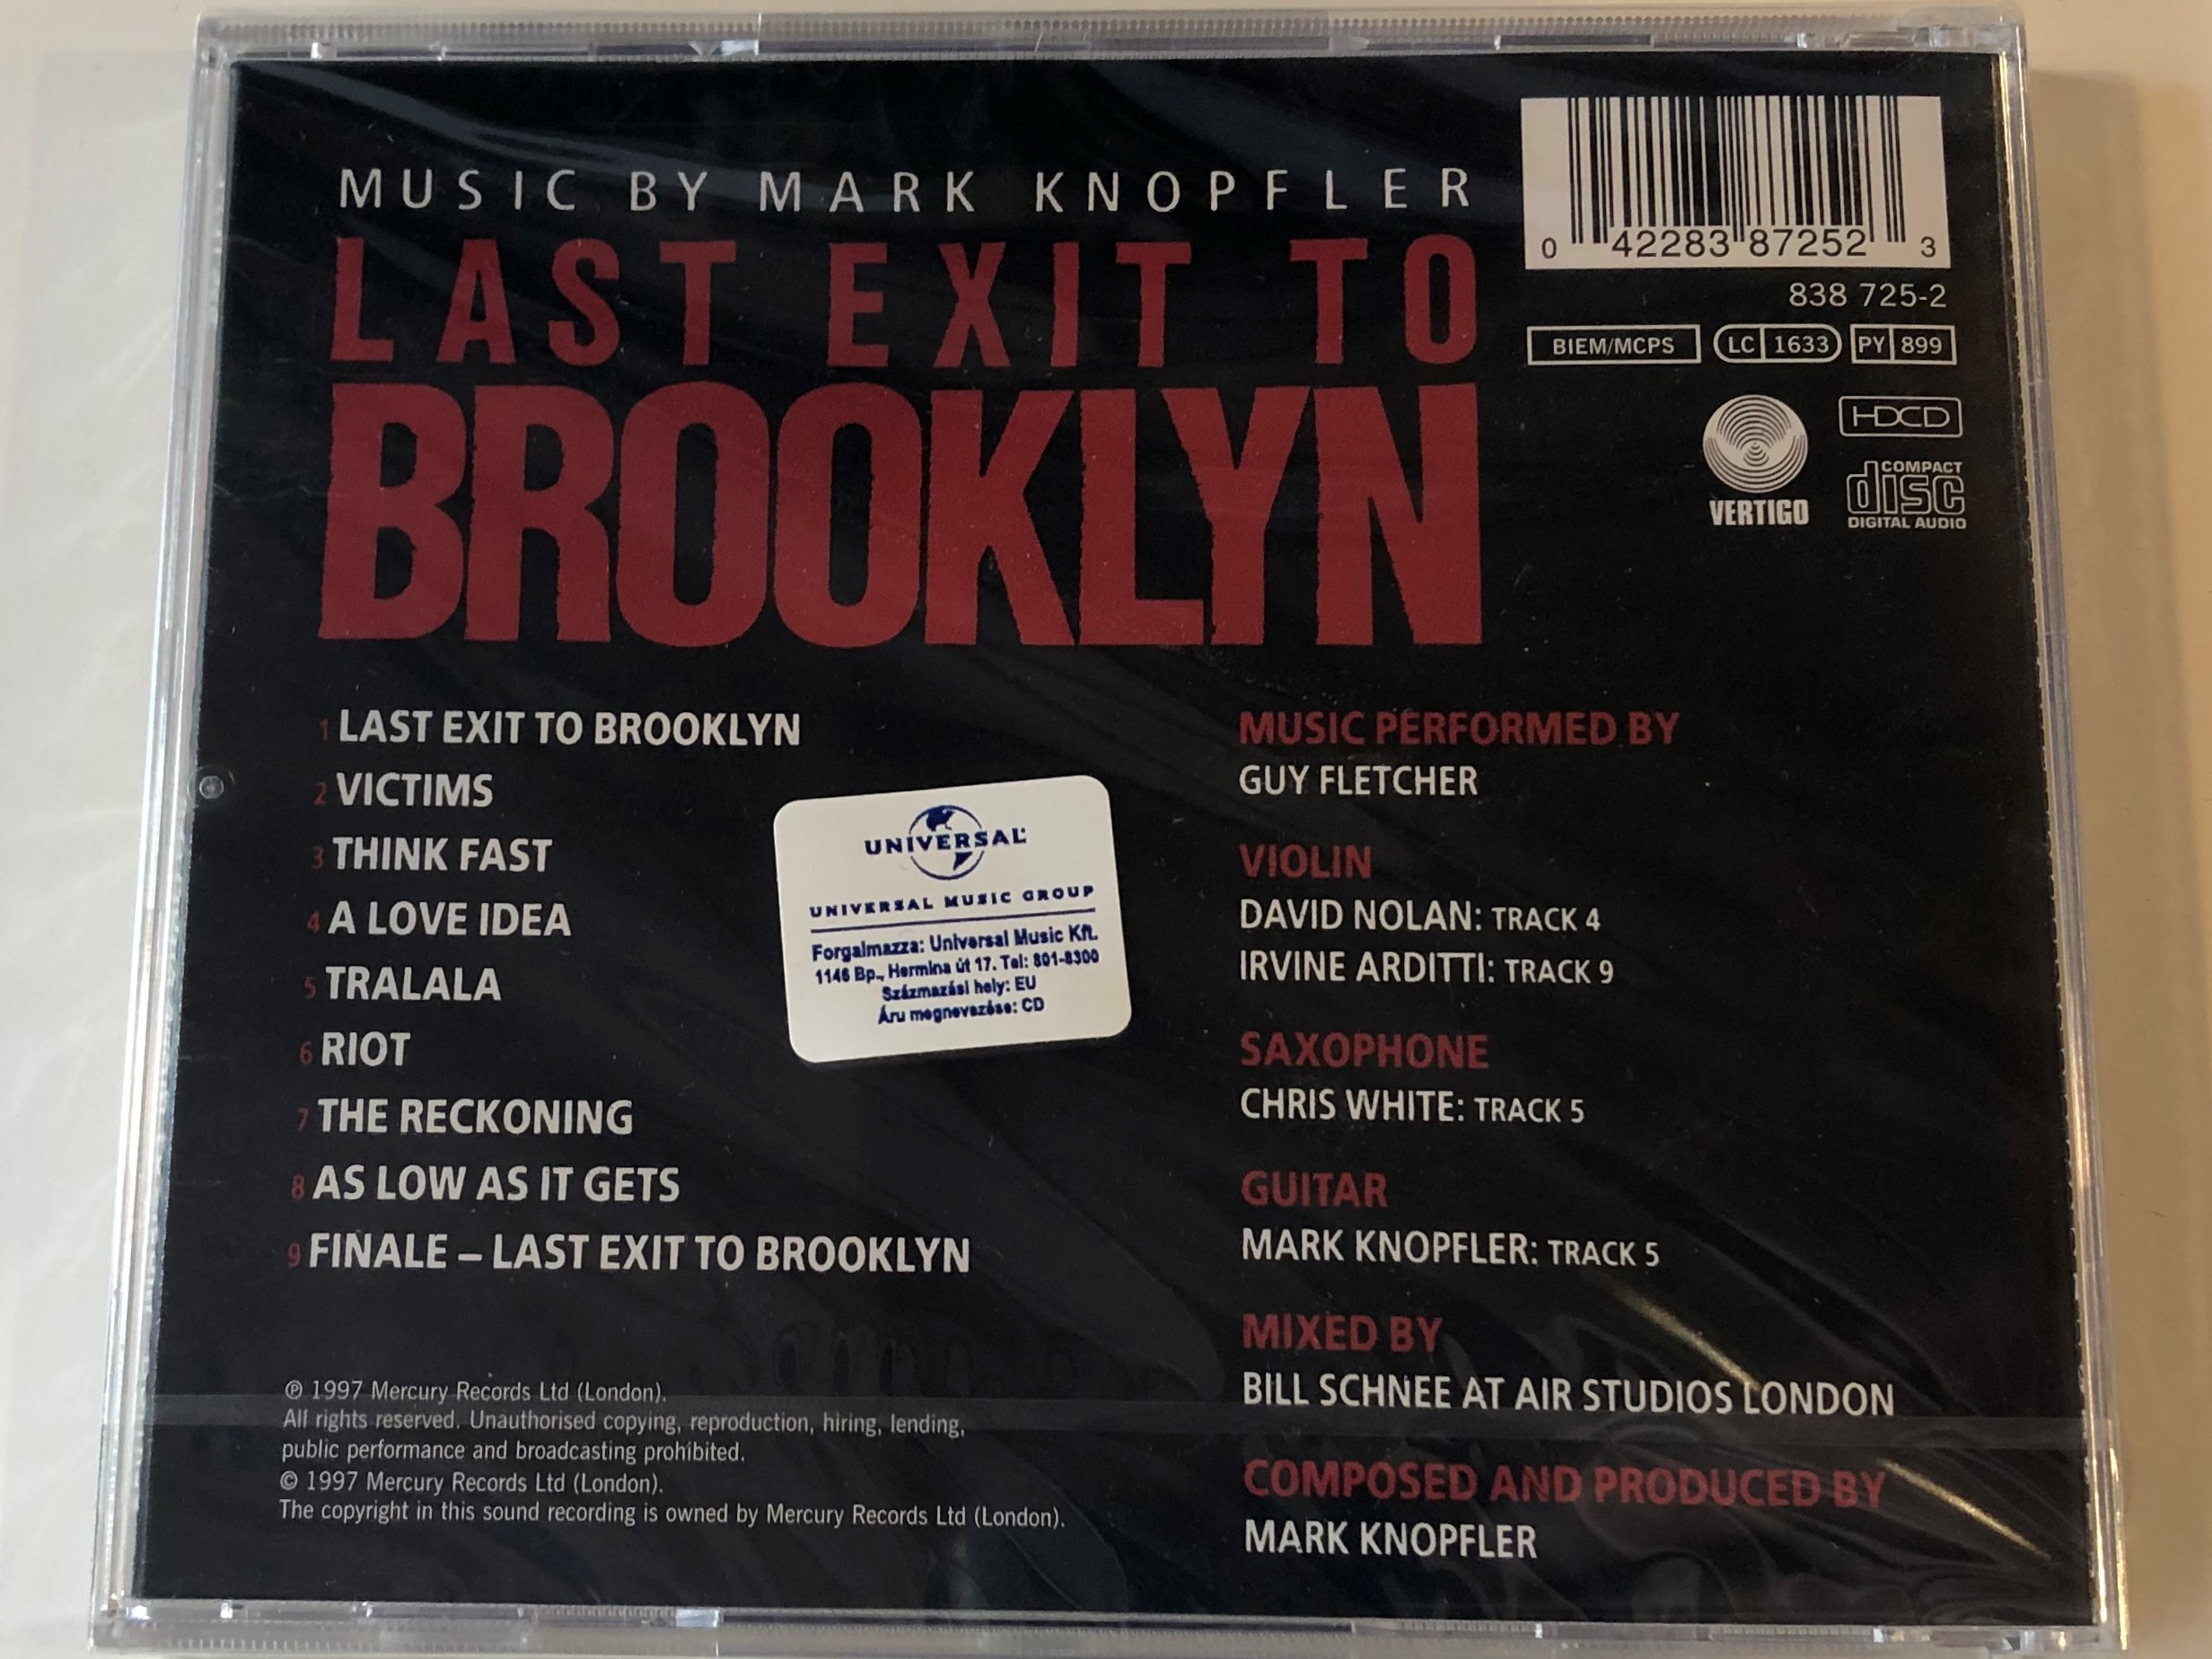 music-by-mark-knopfler-last-exit-to-brooklyn-mercury-records-ltd.-audio-cd-1997-838-725-2-2-.jpg